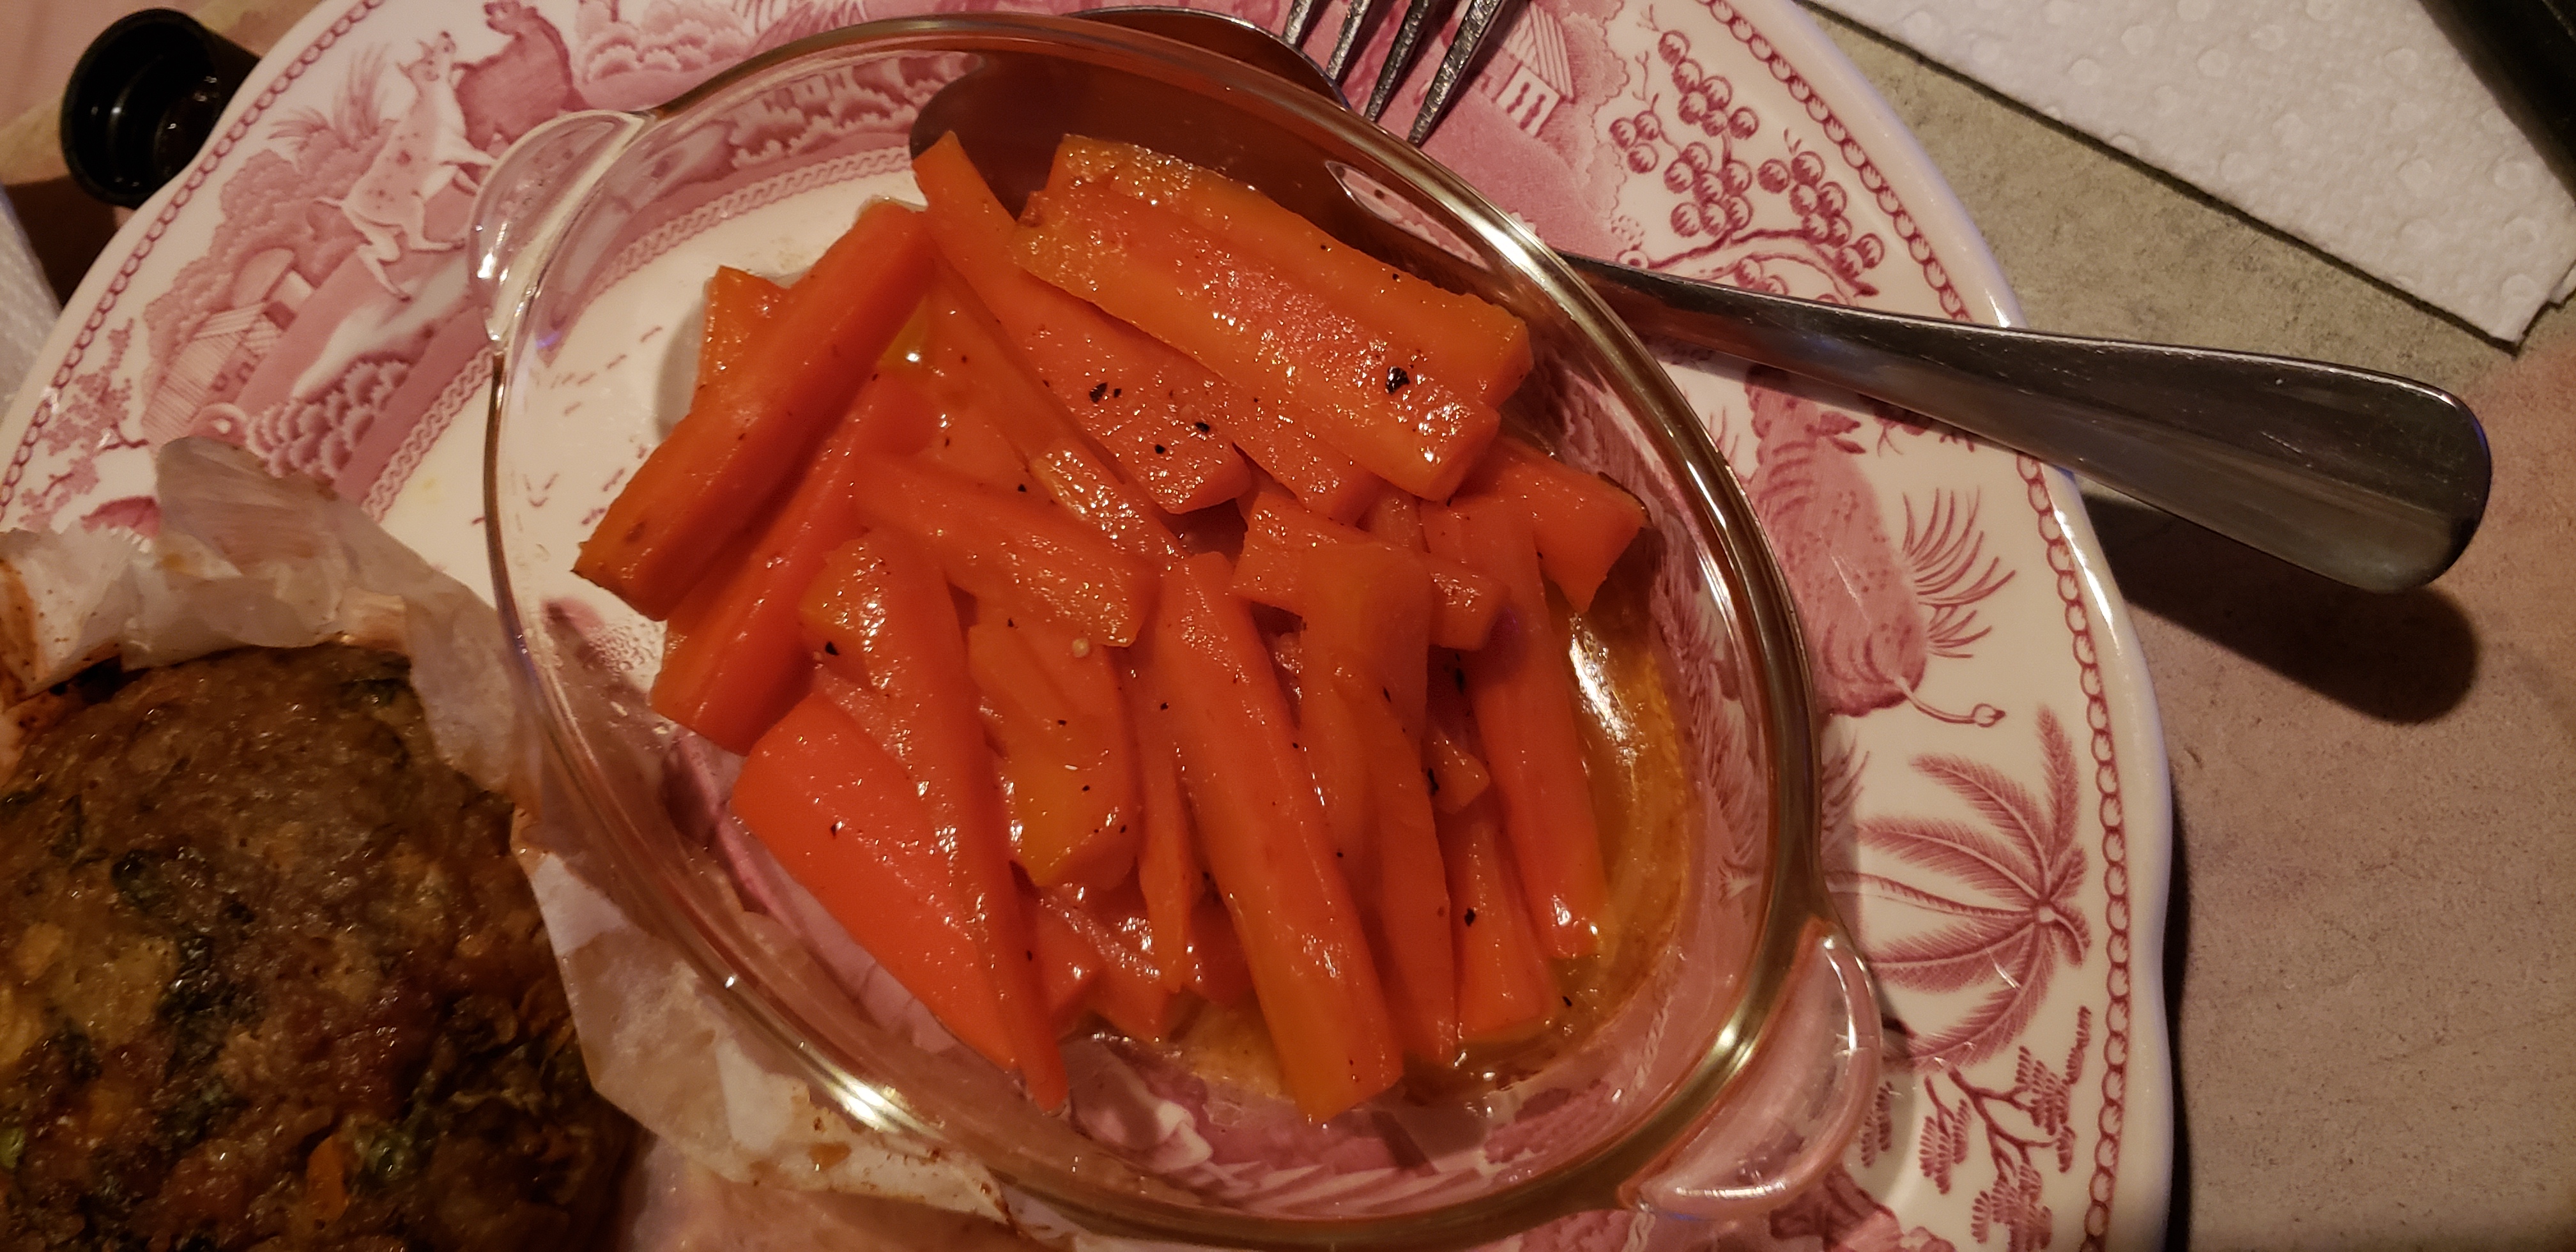 Lemon-Glazed Carrots Coley2123